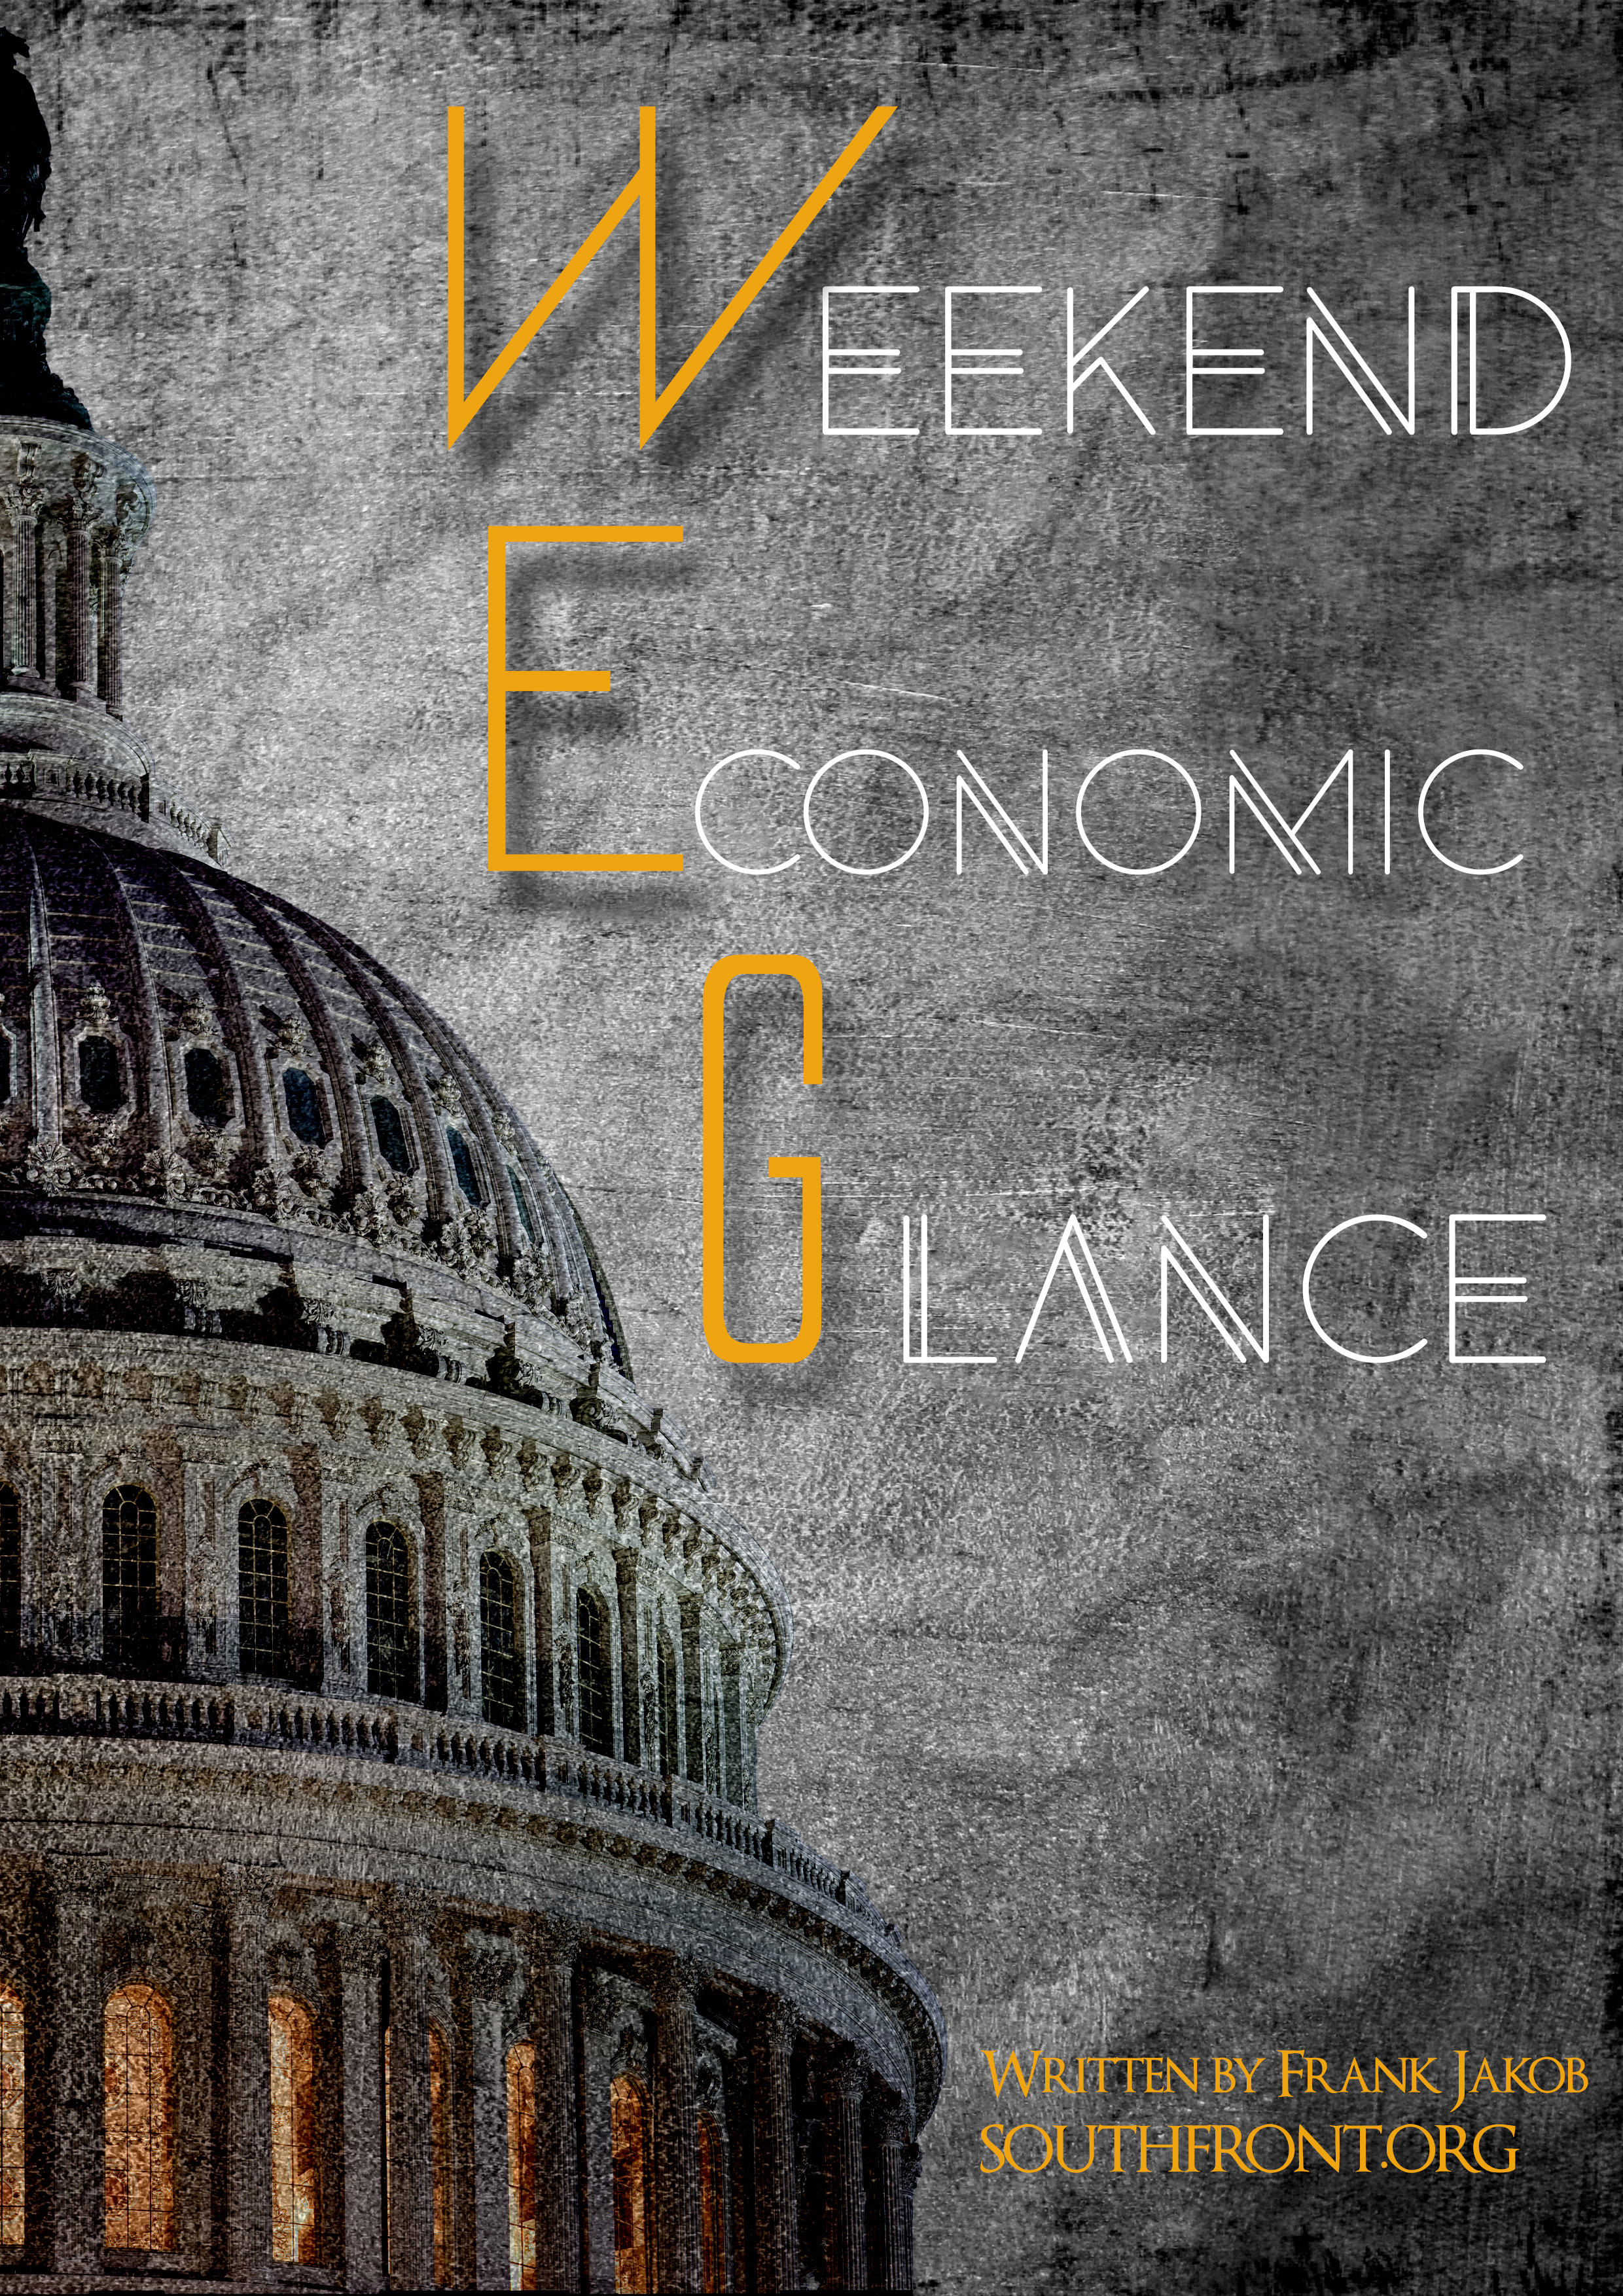 Weekly Economic Glance, Oct. 10-17